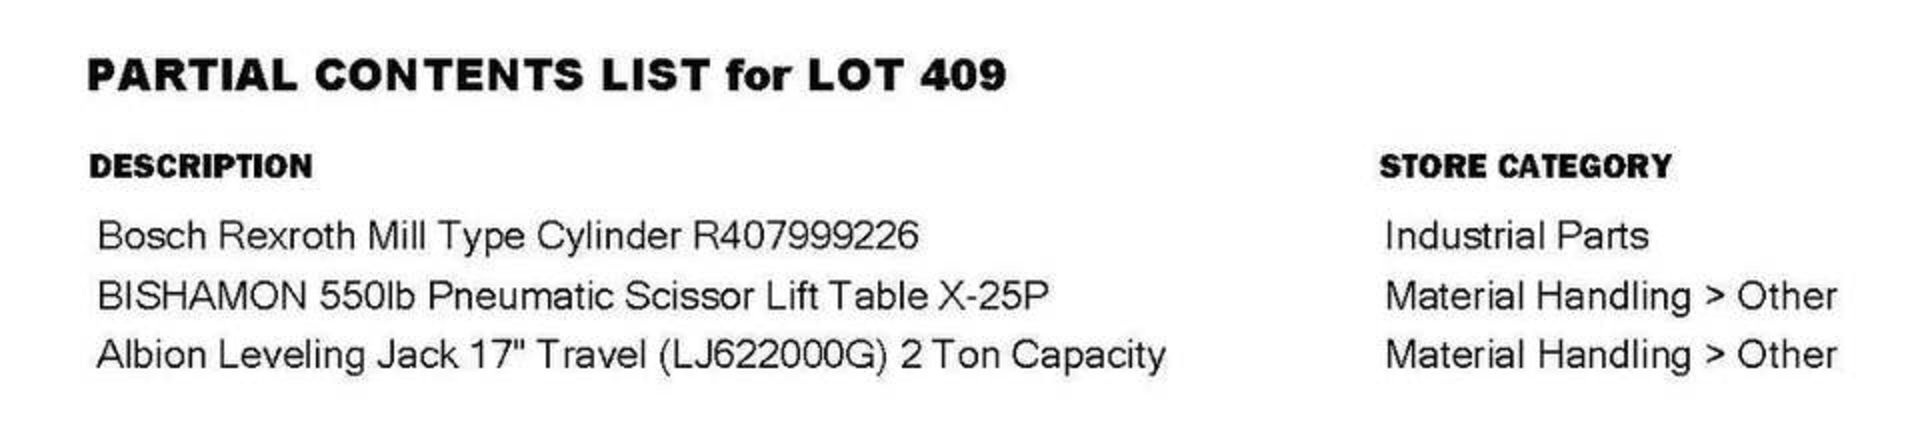 Bishamon 550 lb Scissor Lift; Albion 2 Ton Leveling Jack; Bosch Rexroth Mill Type Cylinder - Image 2 of 2